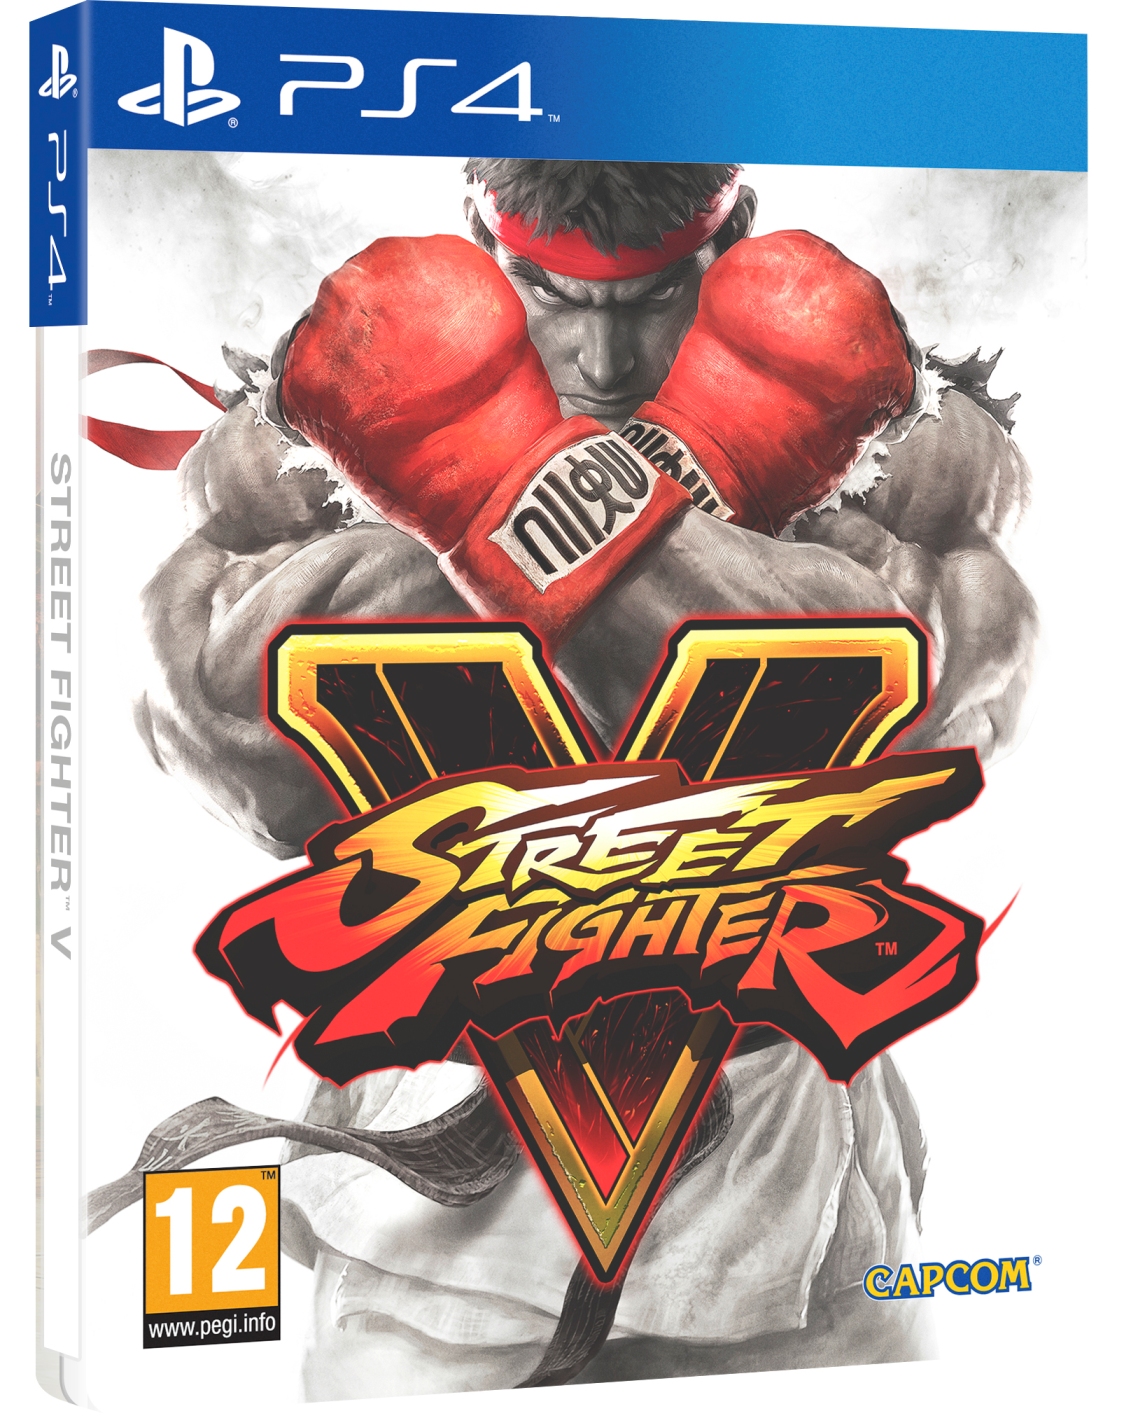 Street Fighter V Steelbook (PS4), Capcom